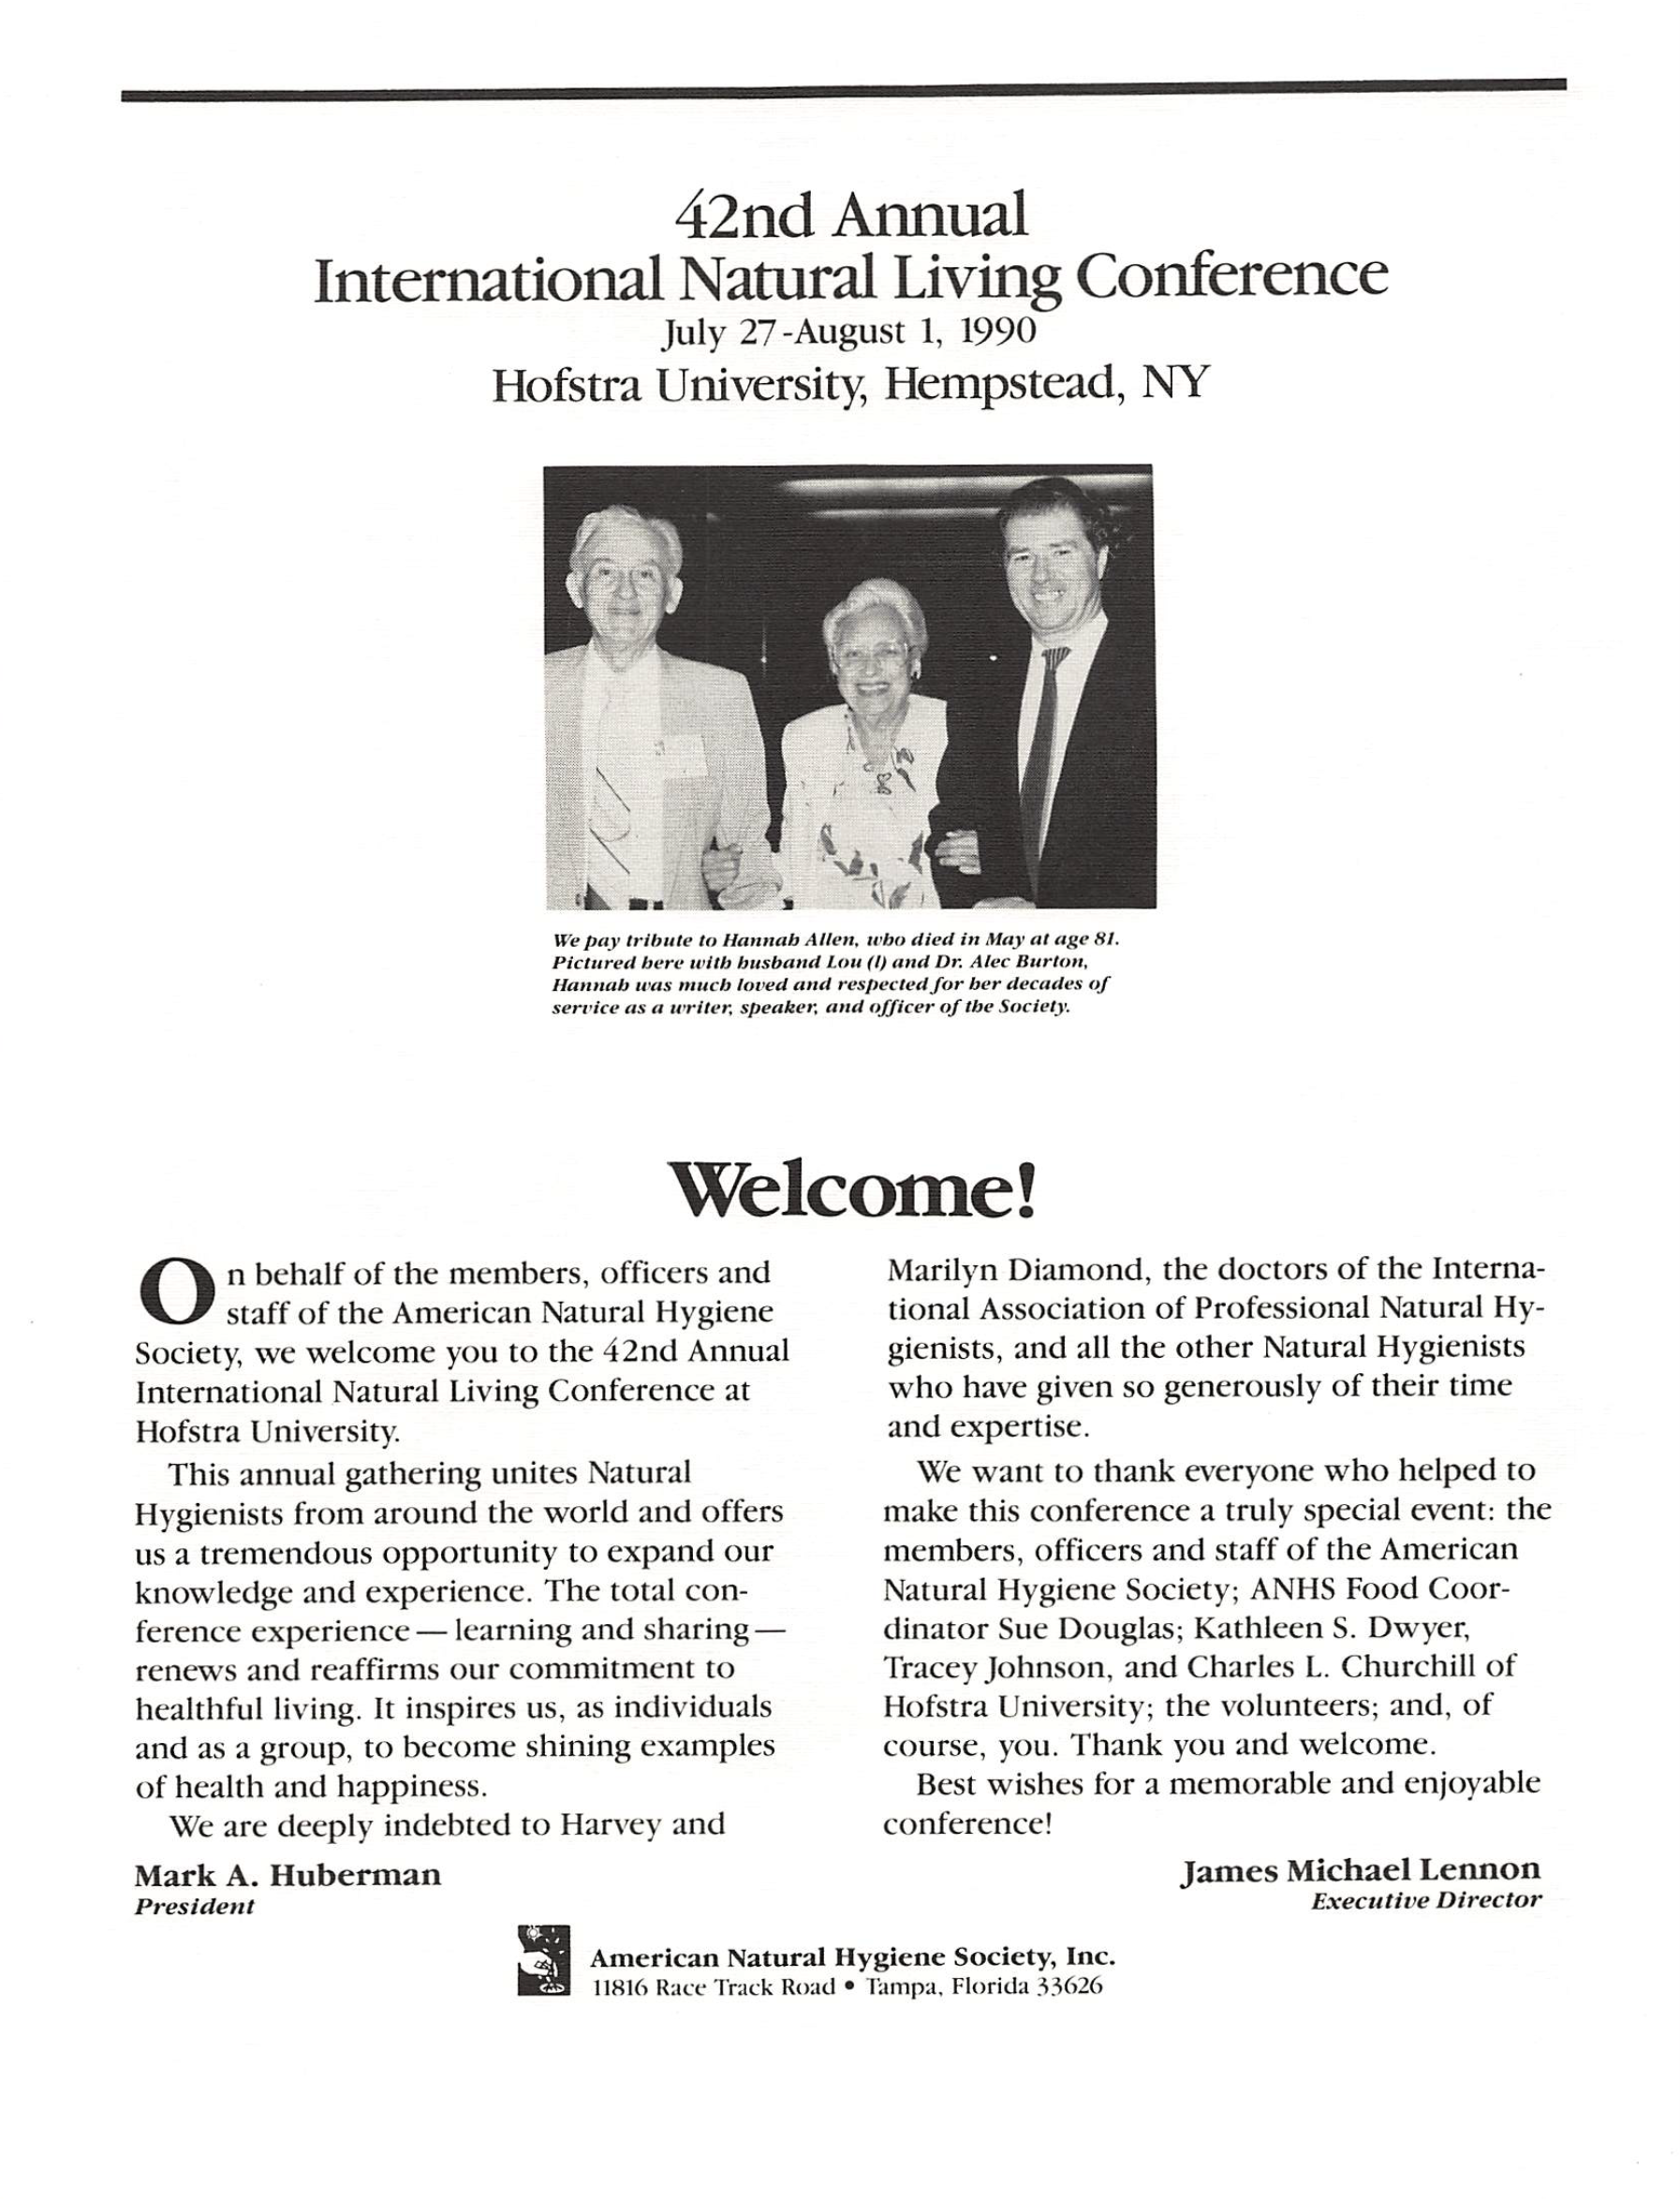 Conference Program. Hempstead, 1990